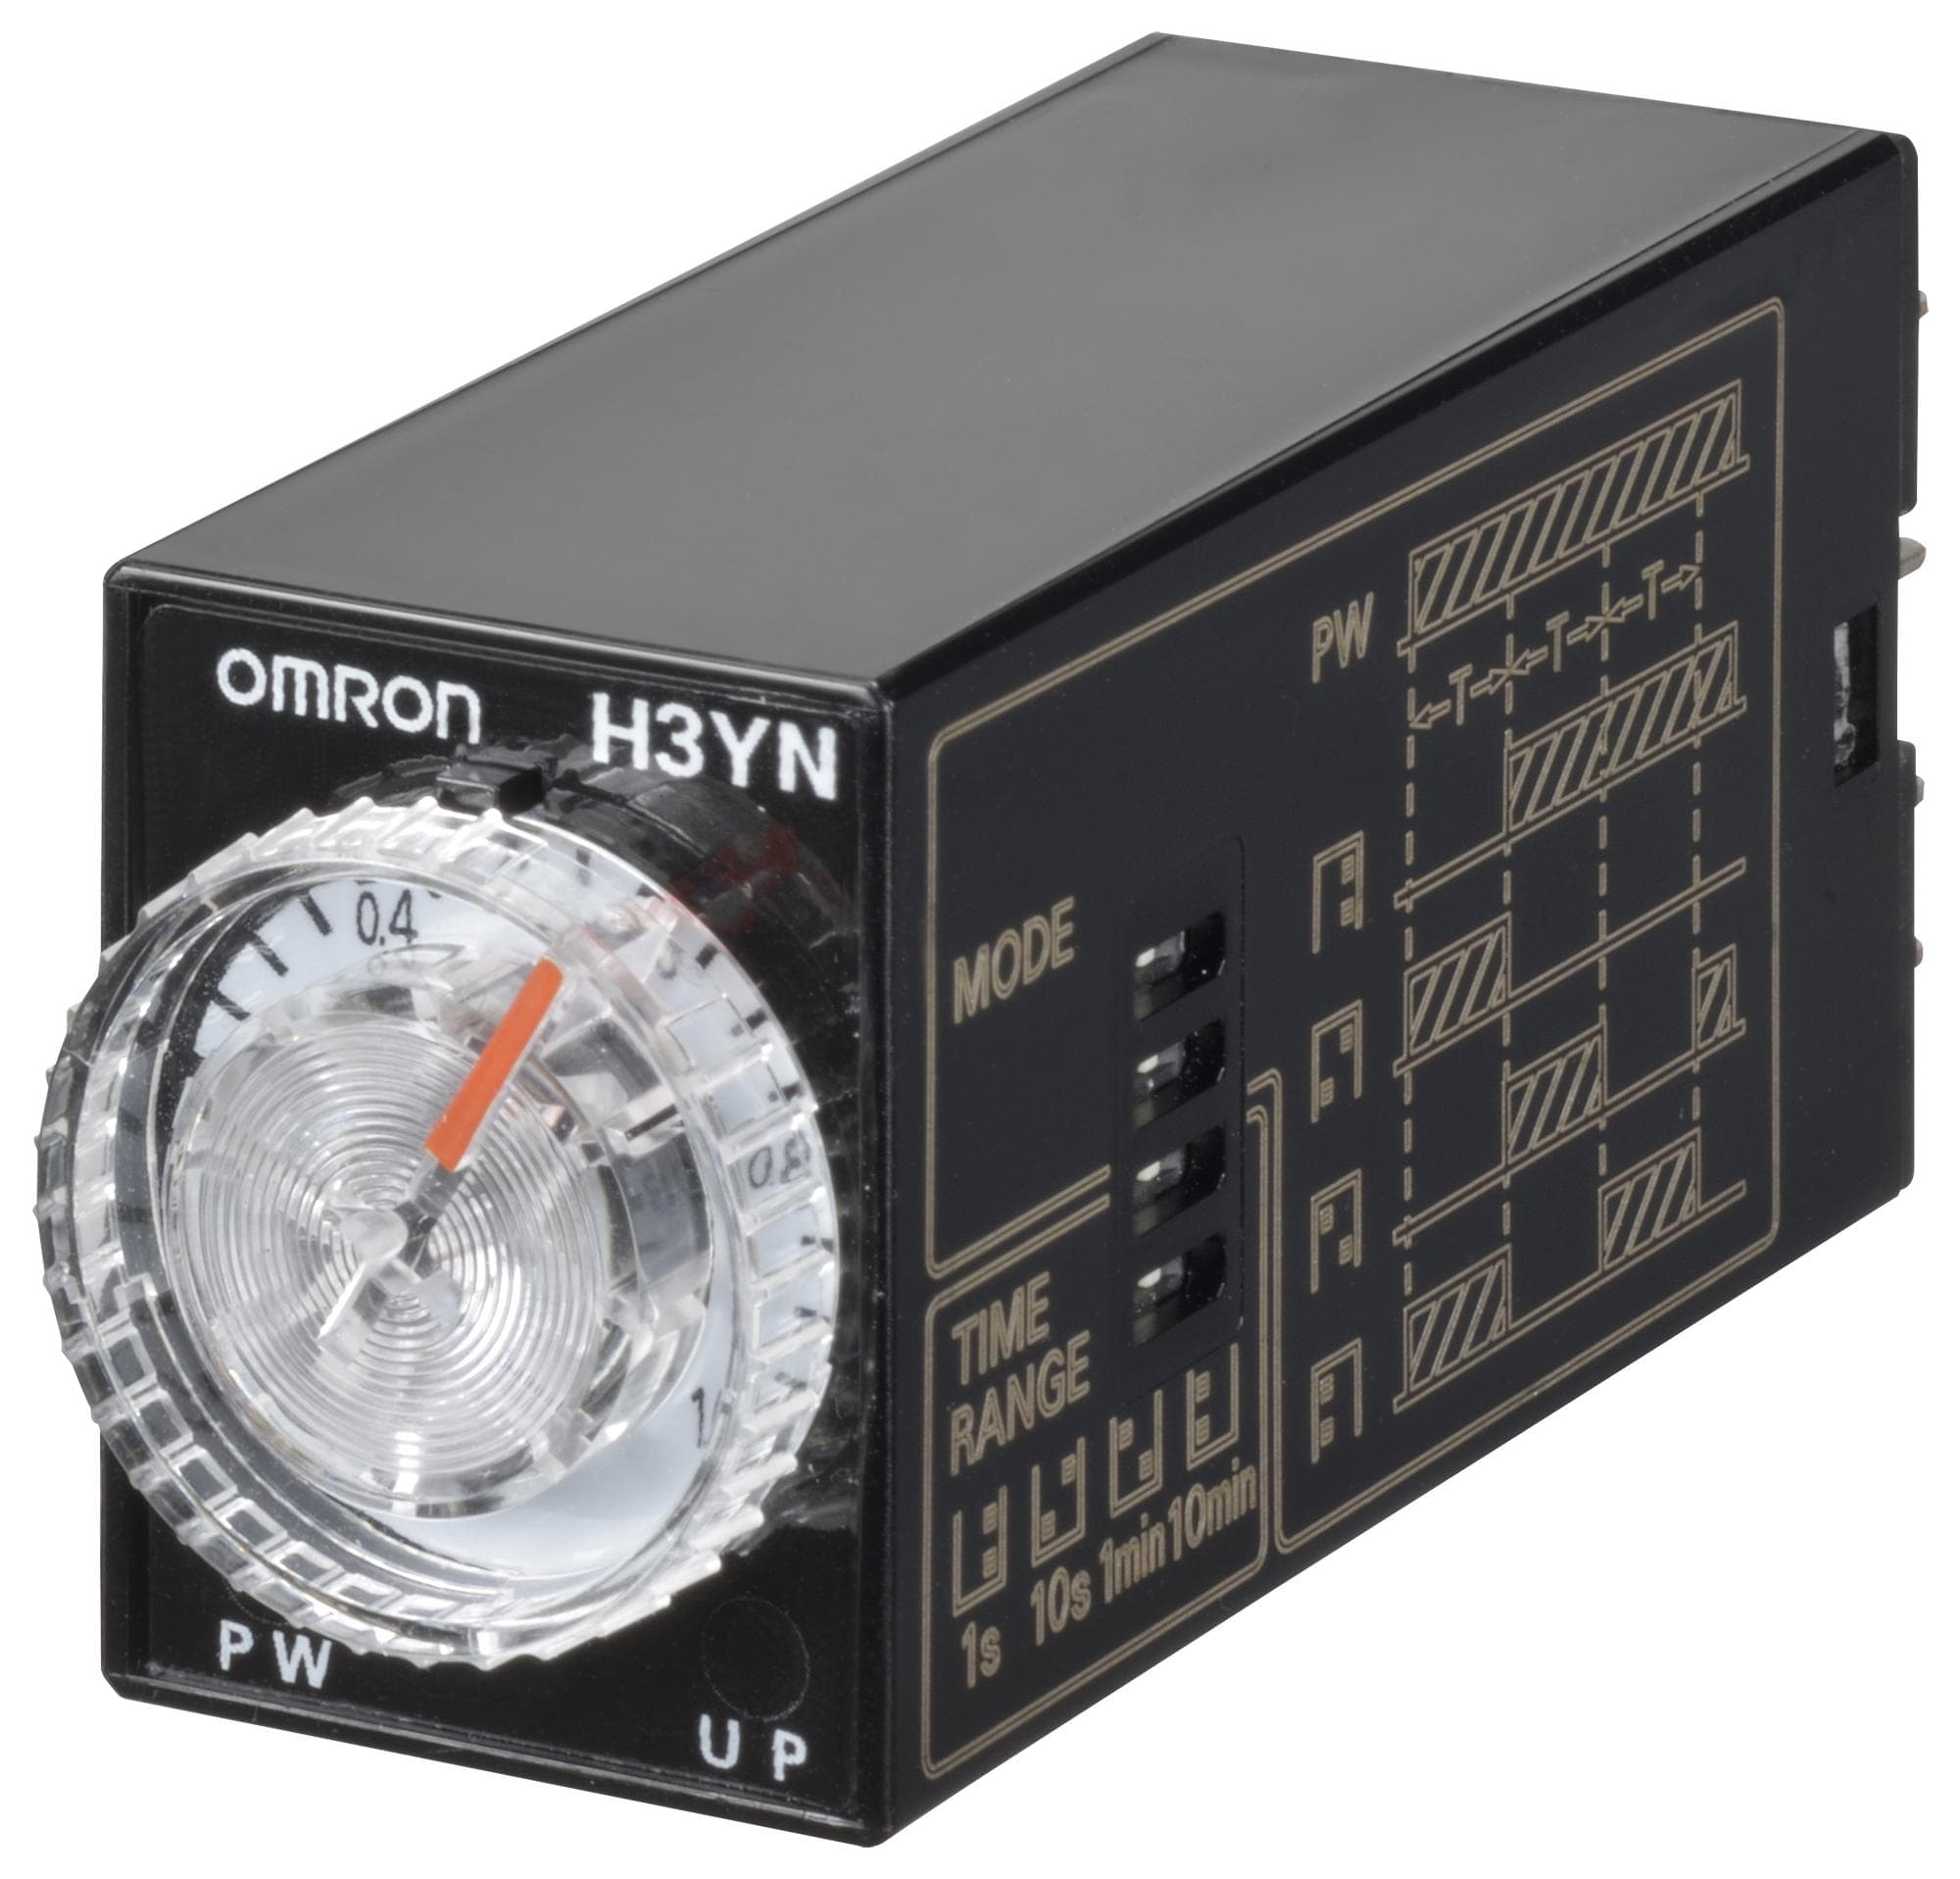 OMRON Analogue Timers H3YN-41-B AC200-230 MULTIFUNCTION TIMER, 0.1MIN-10H, 4PDT OMRON 2578966 H3YN-41-B AC200-230